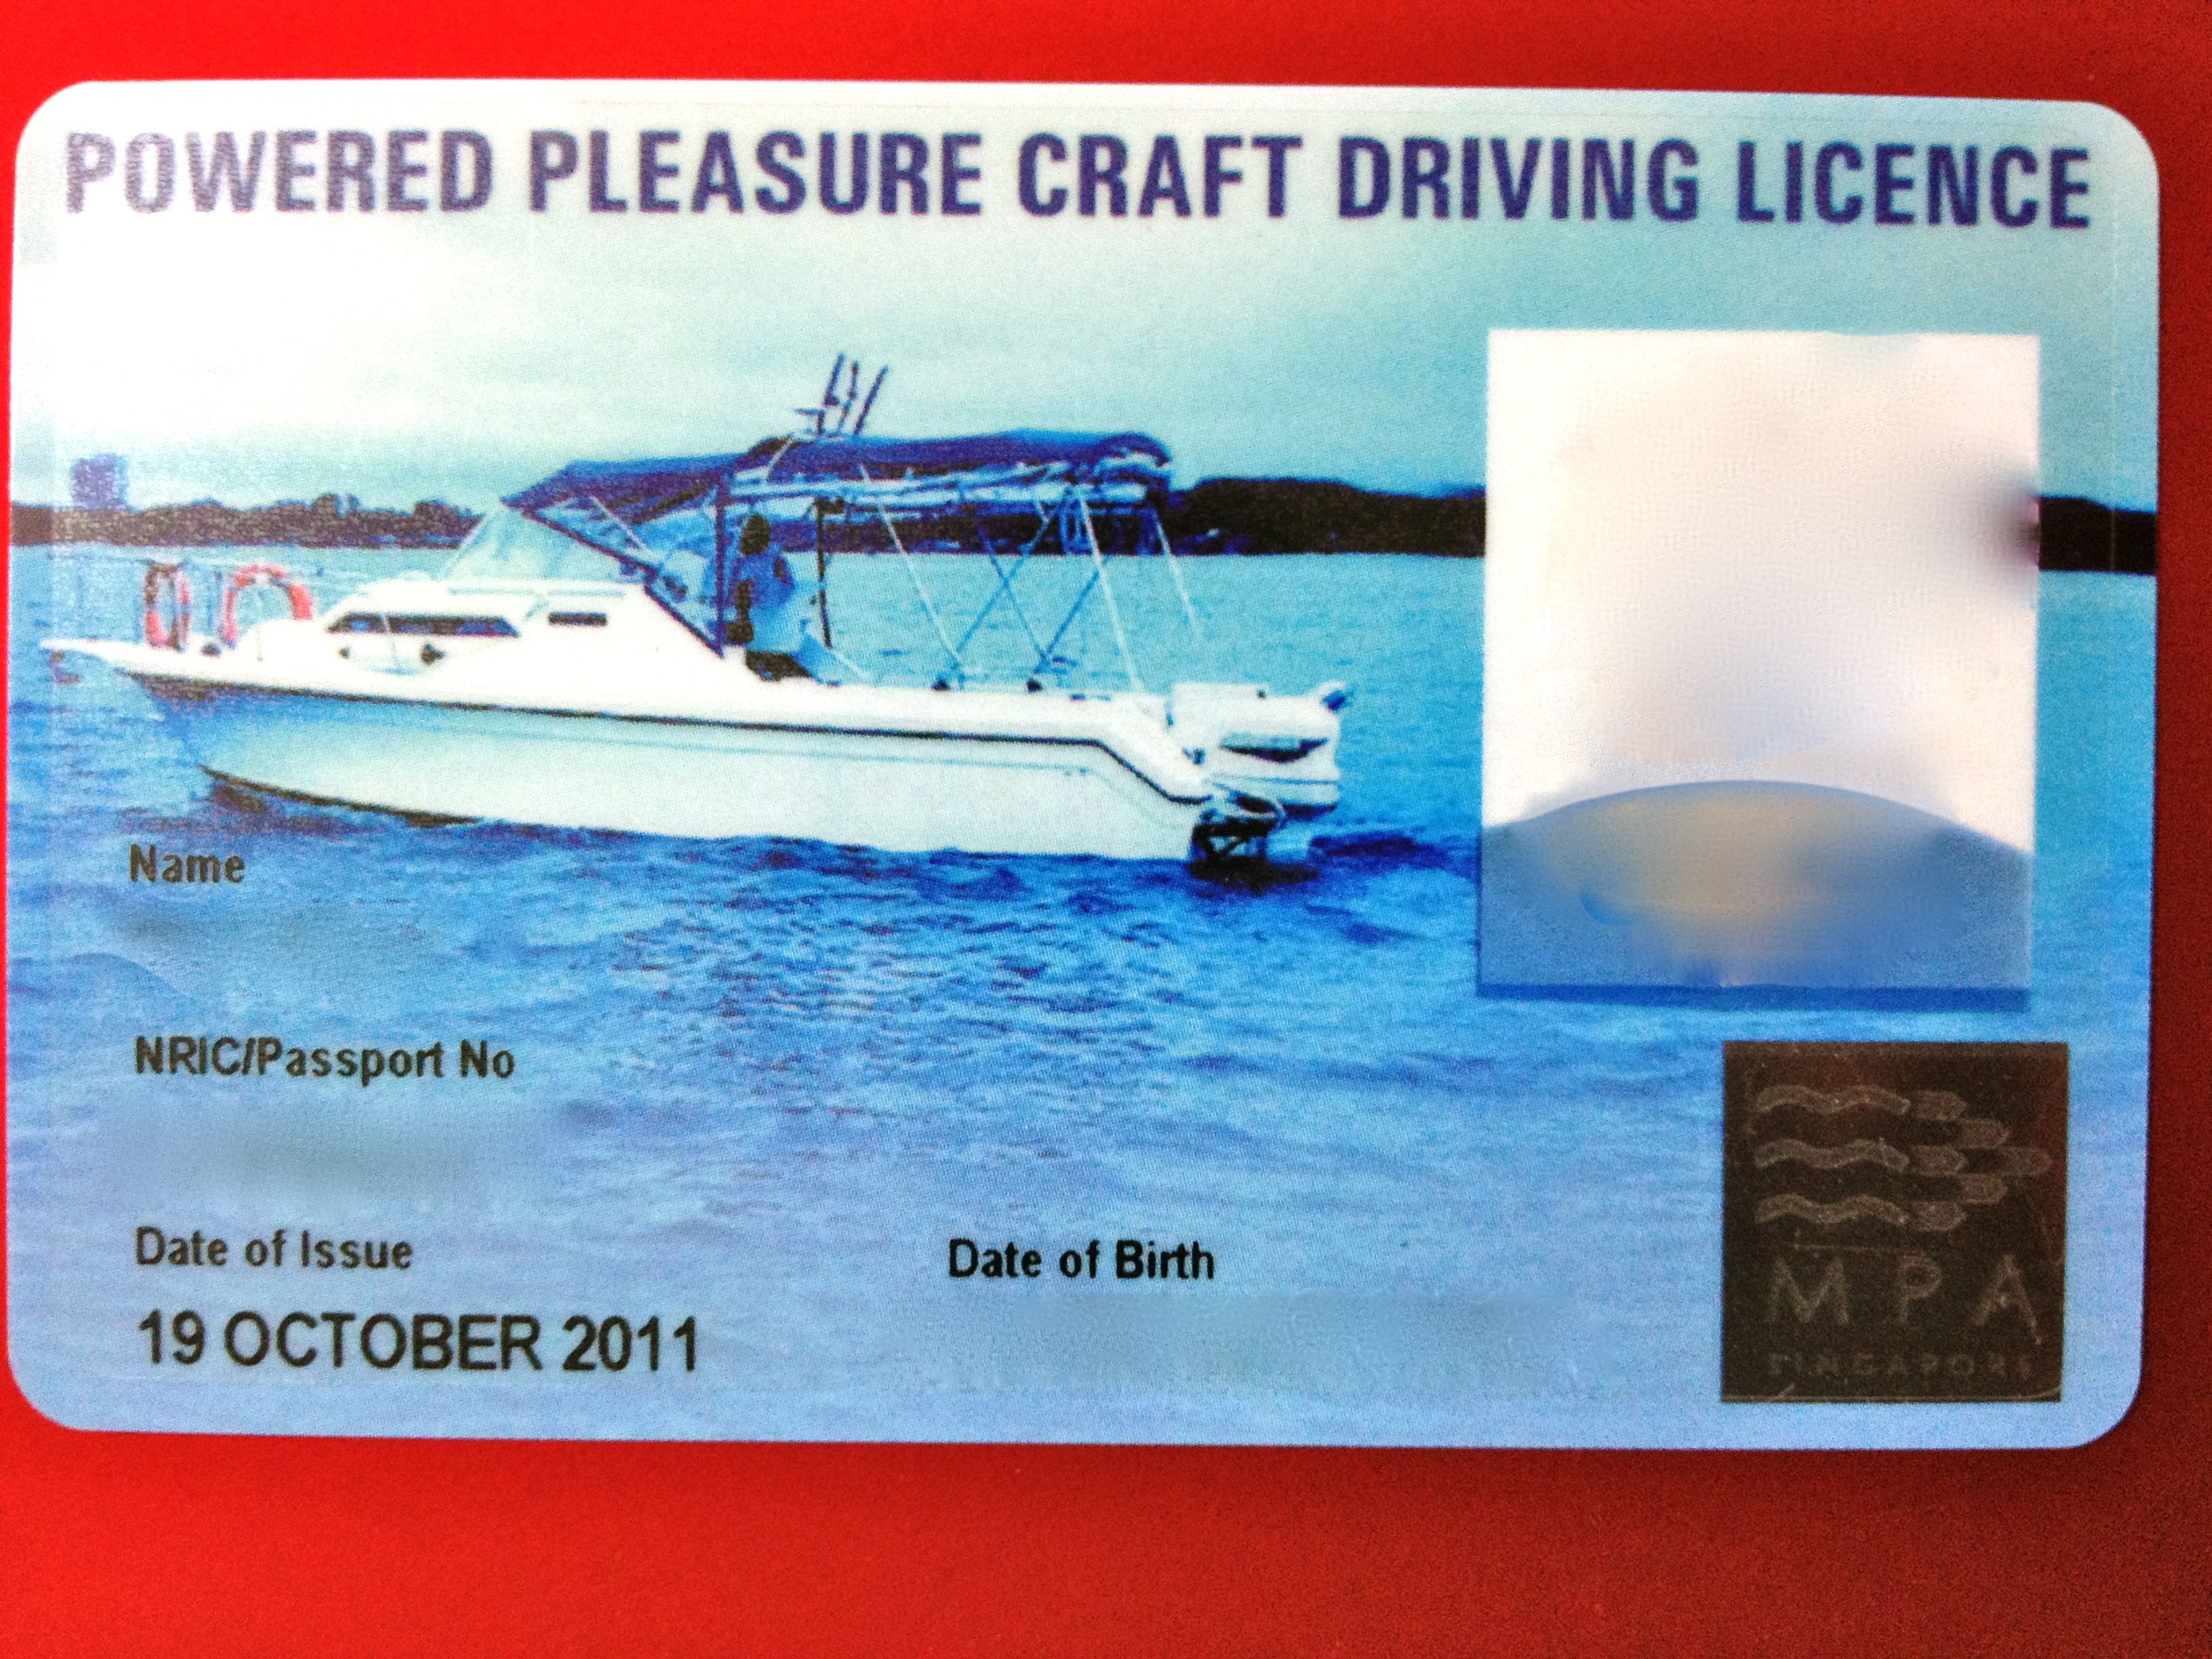 Powered pleasure craft driving license